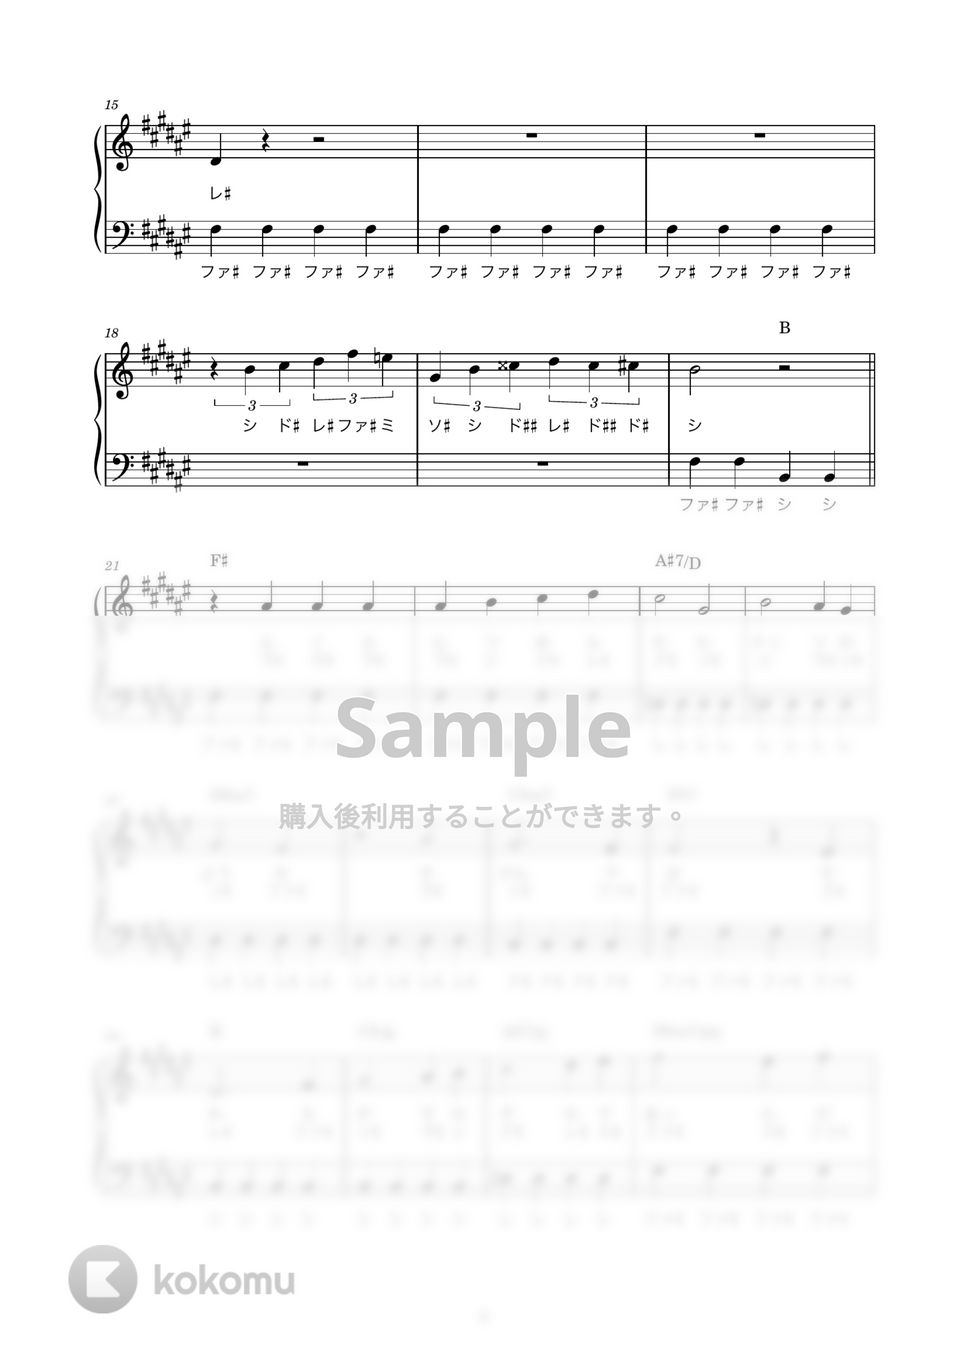 Official髭男dism - ミックスナッツ (かんたん / 歌詞付き / ドレミ付き / 初心者) by piano.tokyo